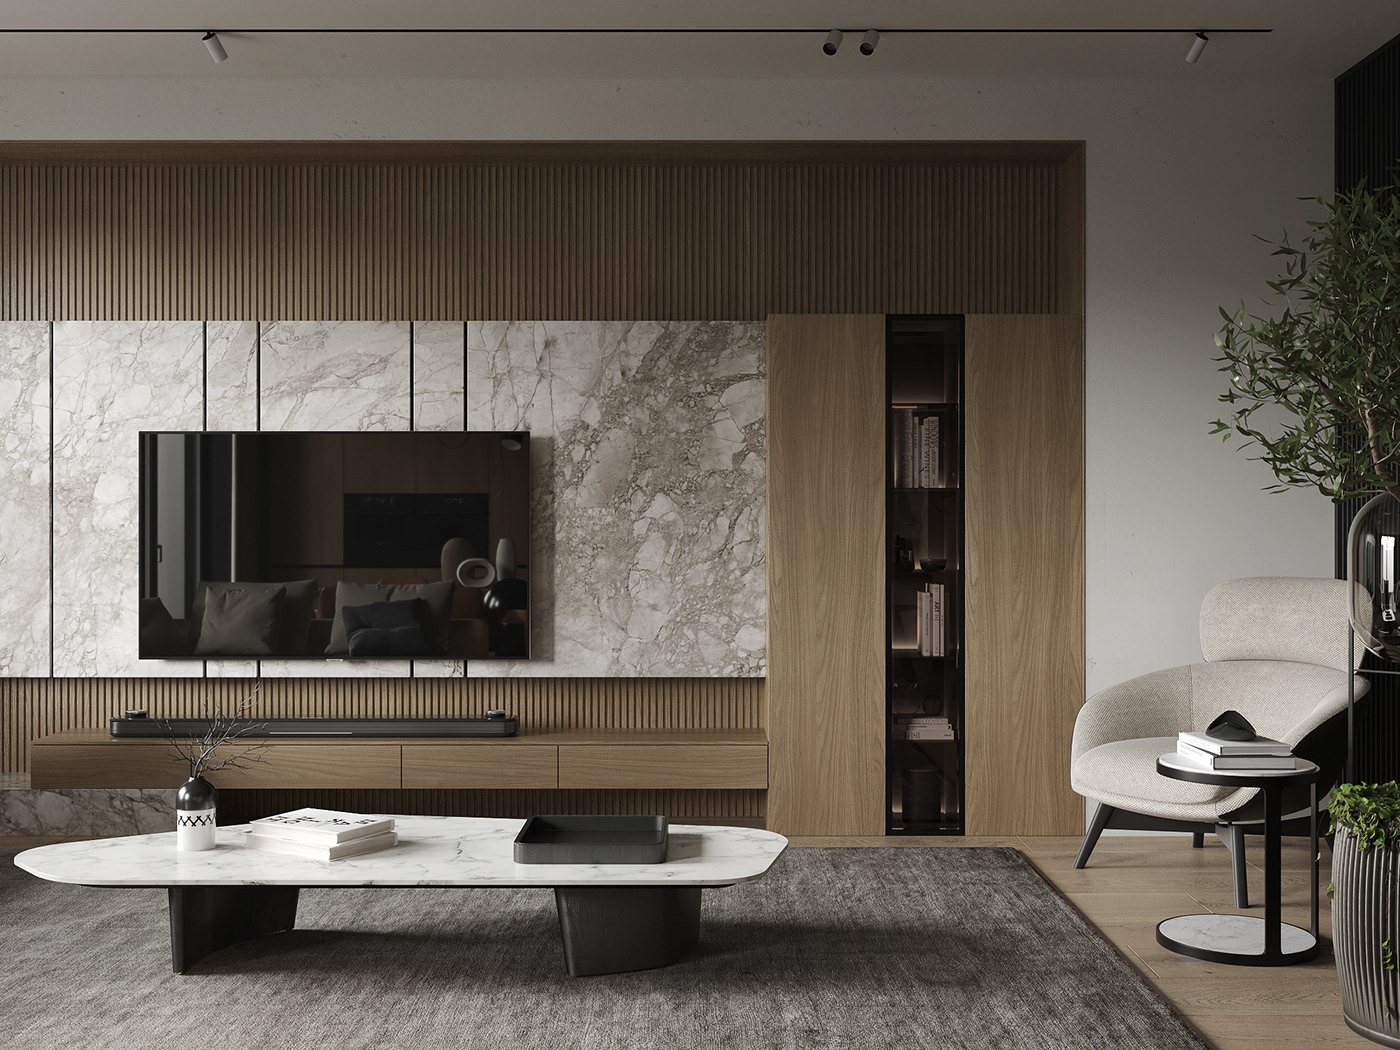 Flos interior design  Minotti poliform дизайн интерьера Дизайн квартиры Интерьер квартиры минимализм в интерьере современный интерьер шпон